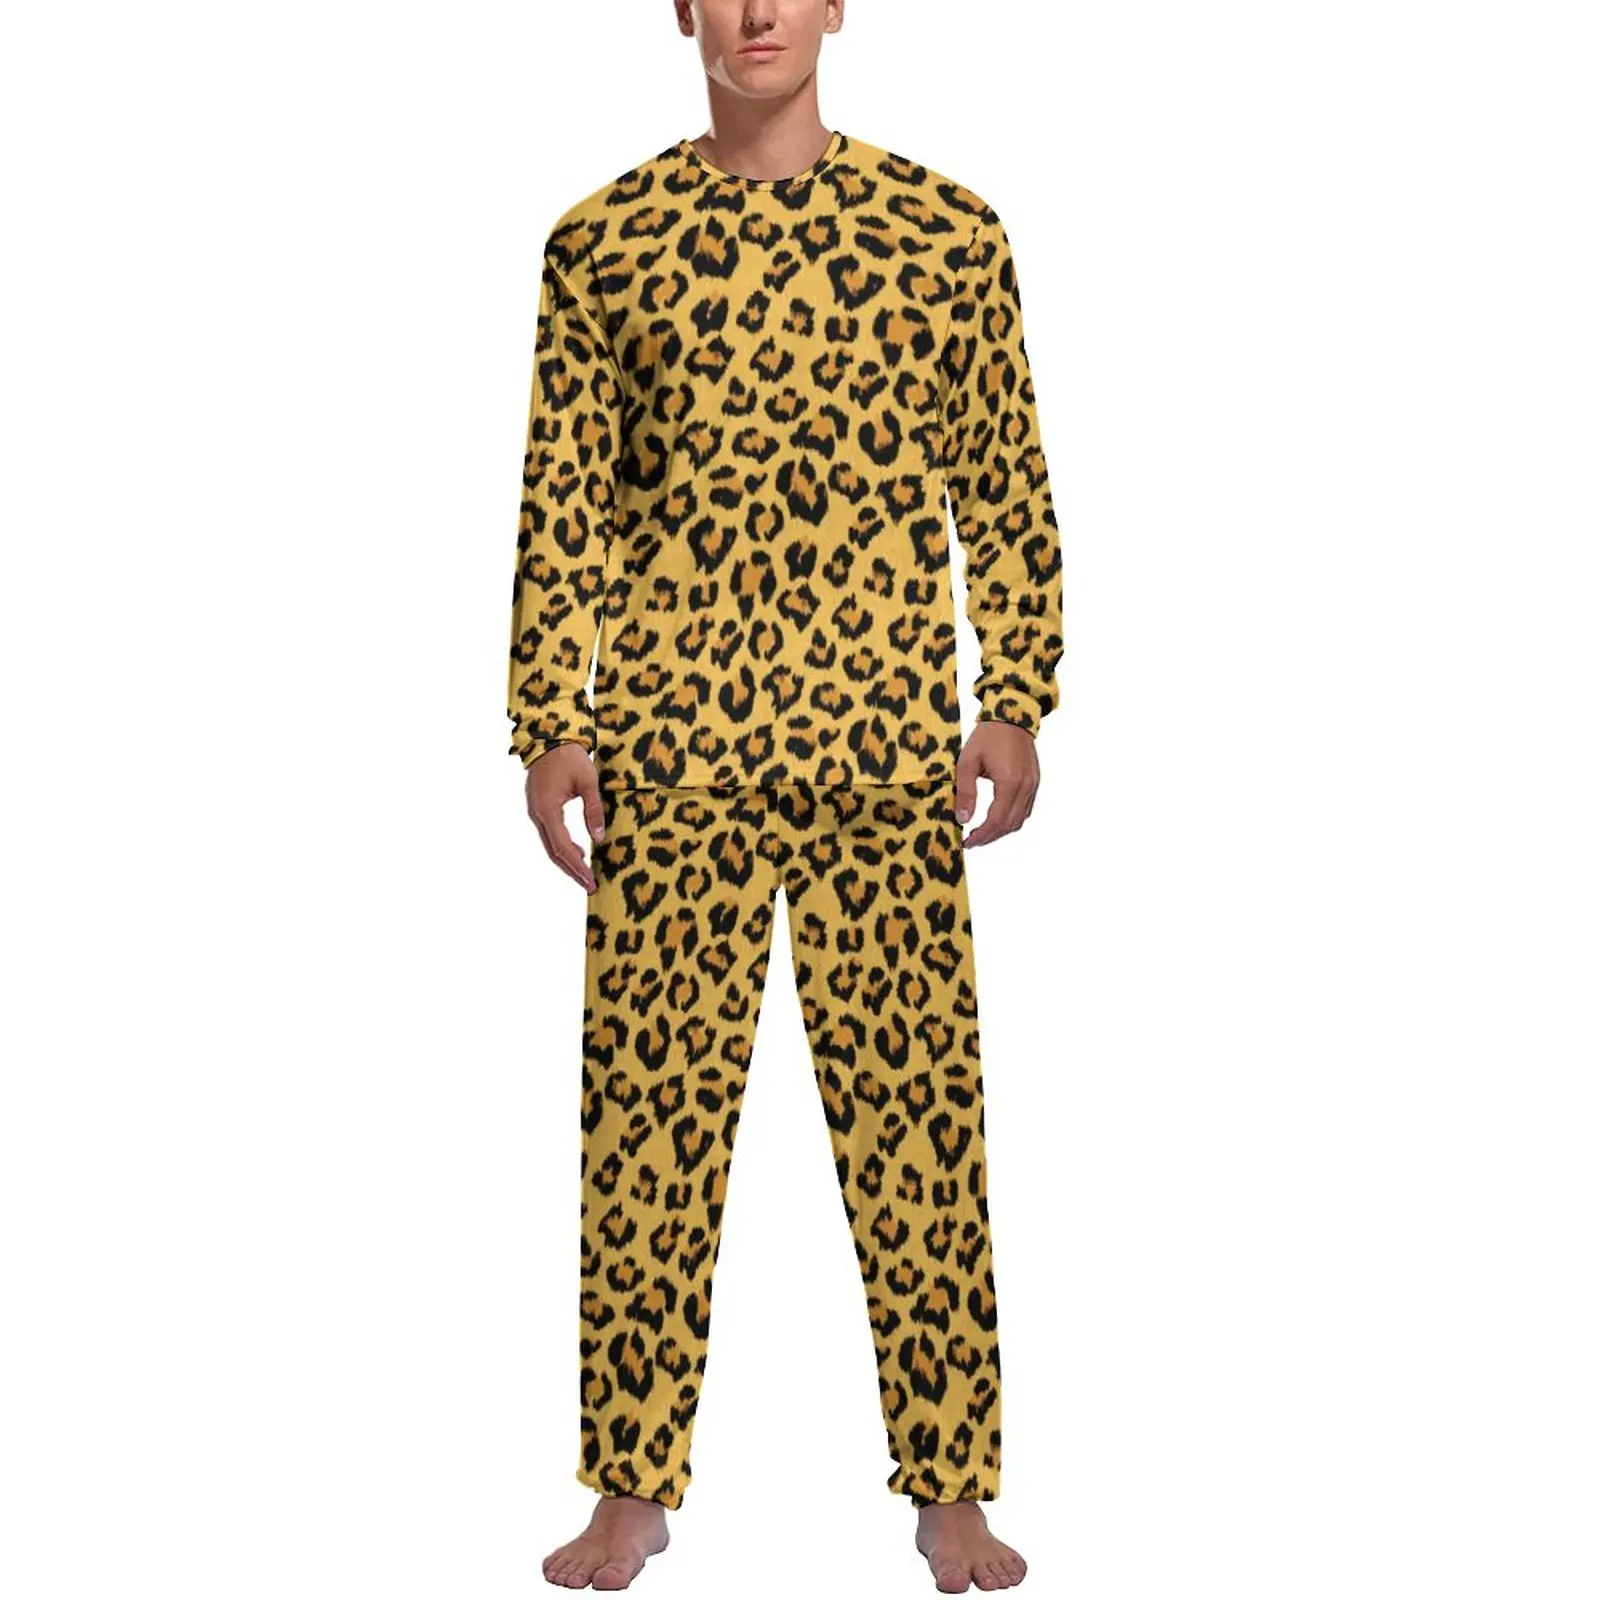 Classic Leopard Pajamas Men Faux Fur Animal Print Soft Sleepwear Winter Long Sleeve 2 Pieces Casual Graphic Pajama Sets